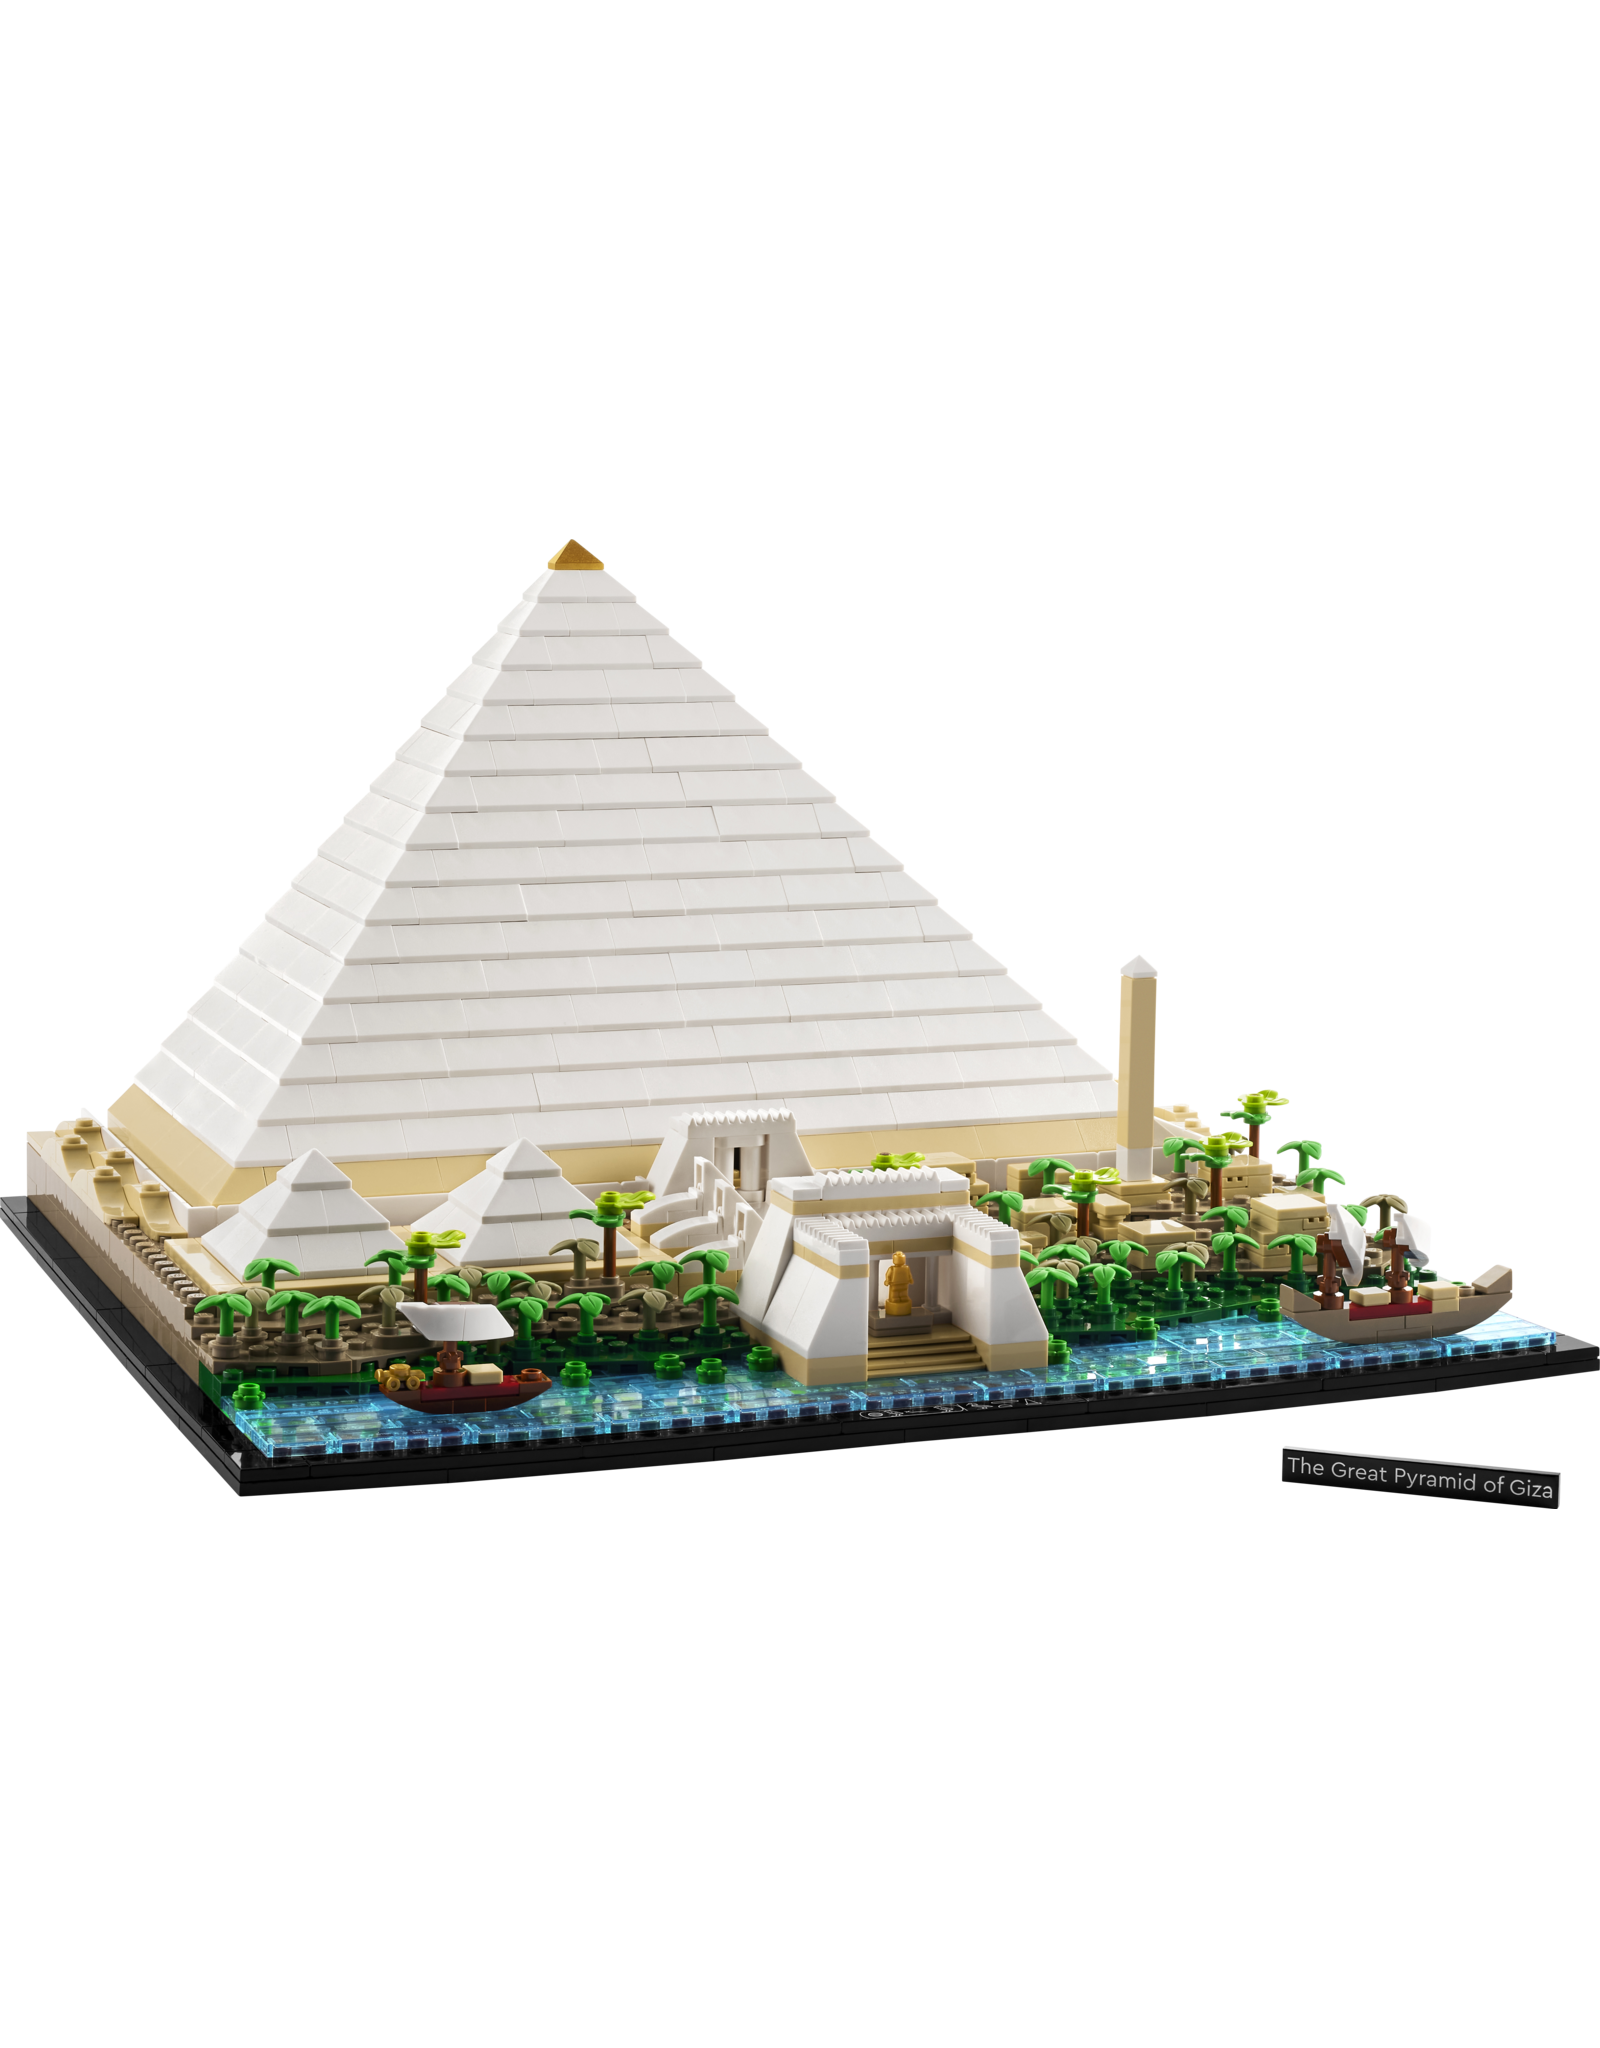 LEGO Great Pyramid Of Giza Architecture 21058